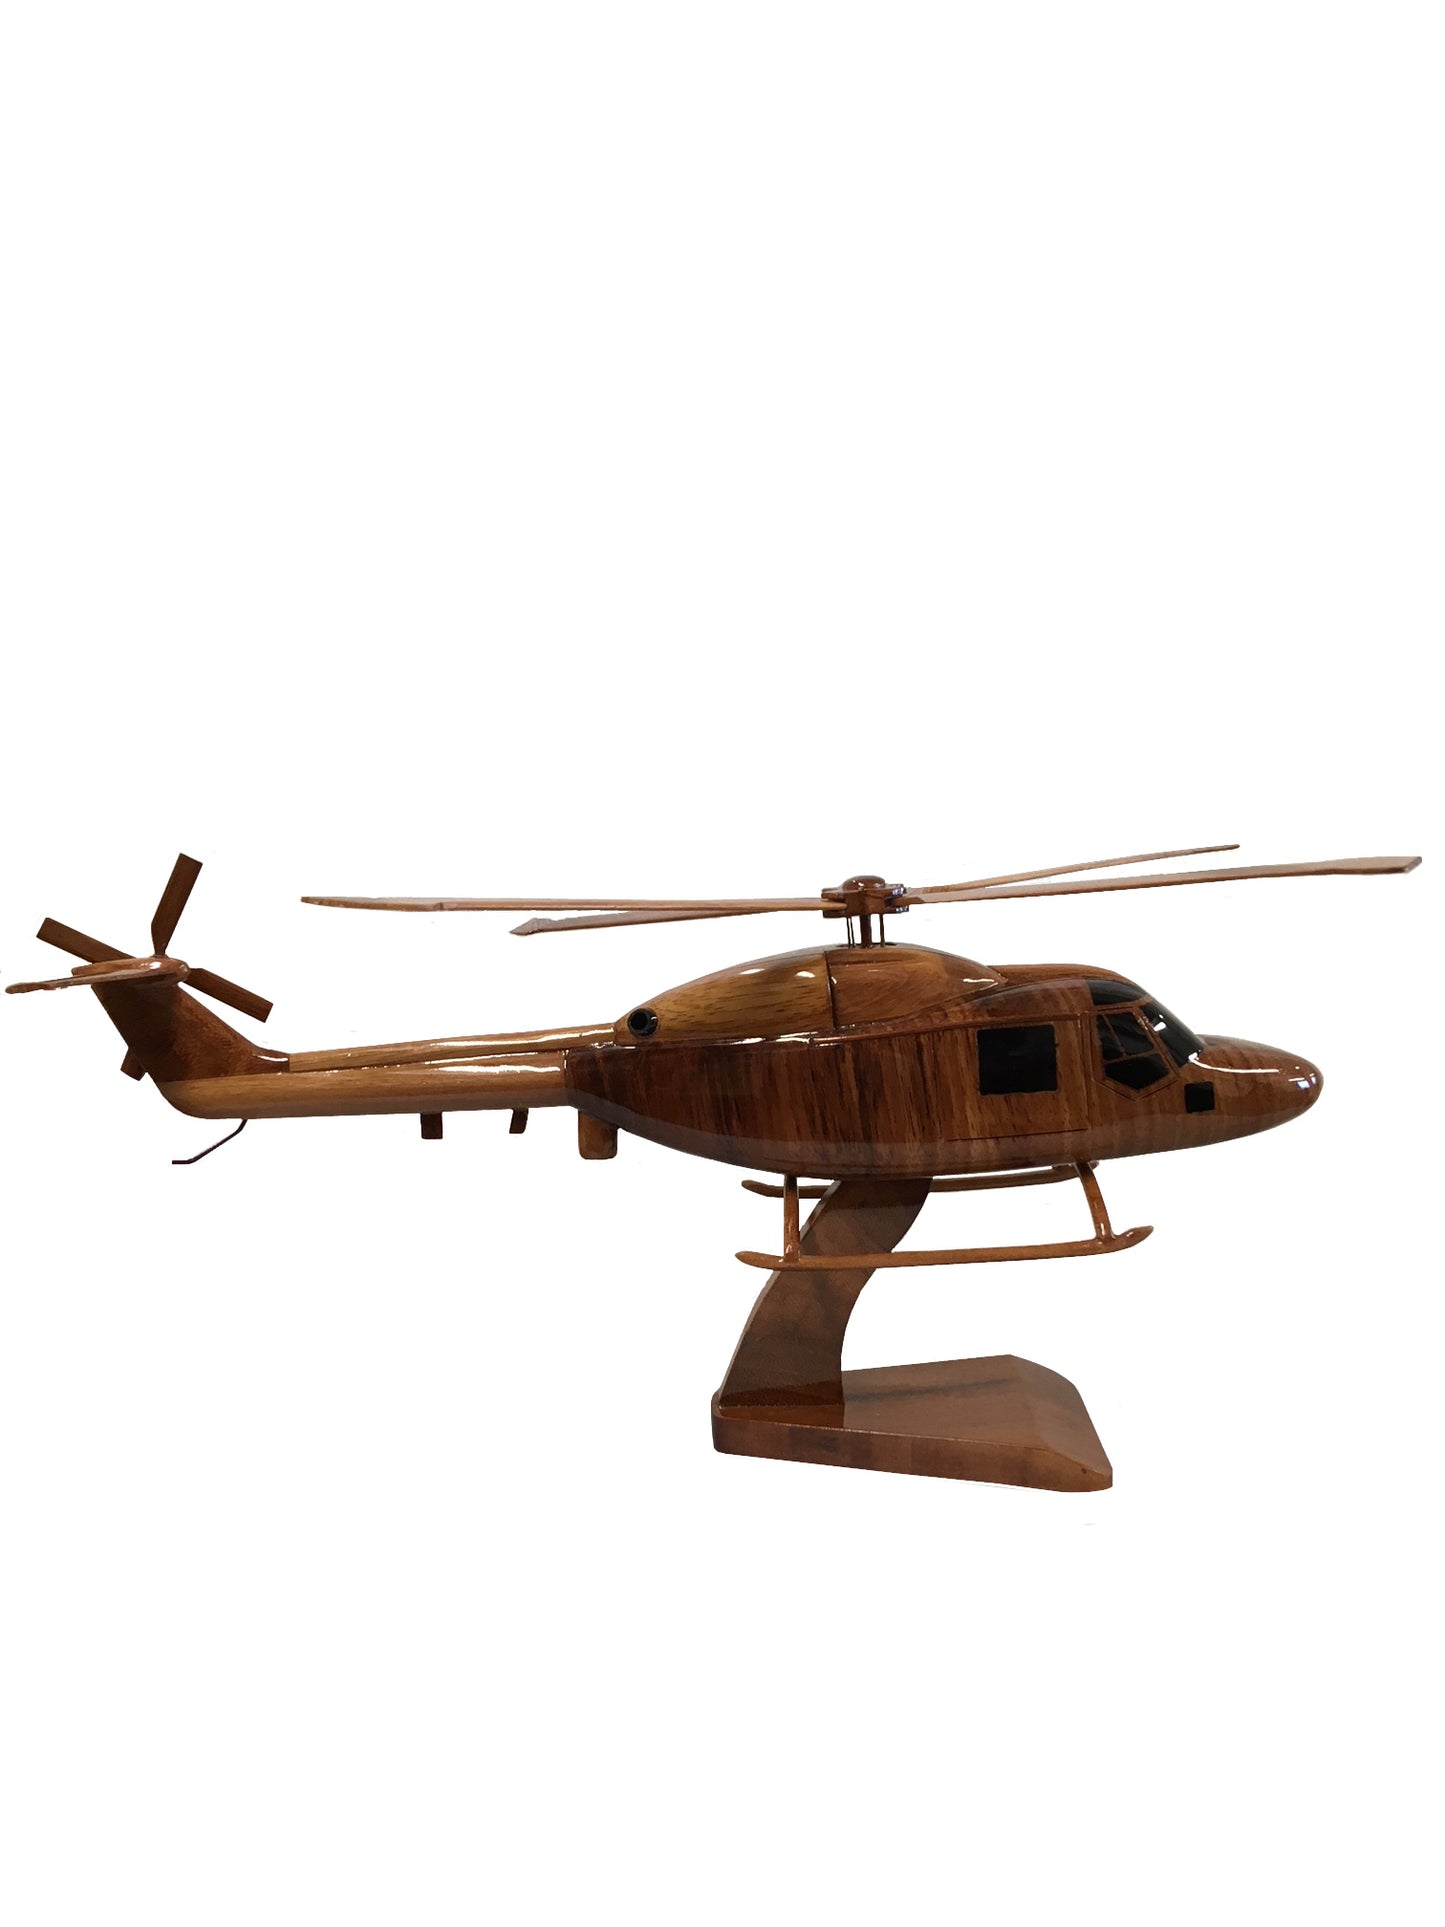 Westland Lynx AH-7 British Army Military Helicopter Desktop Model.